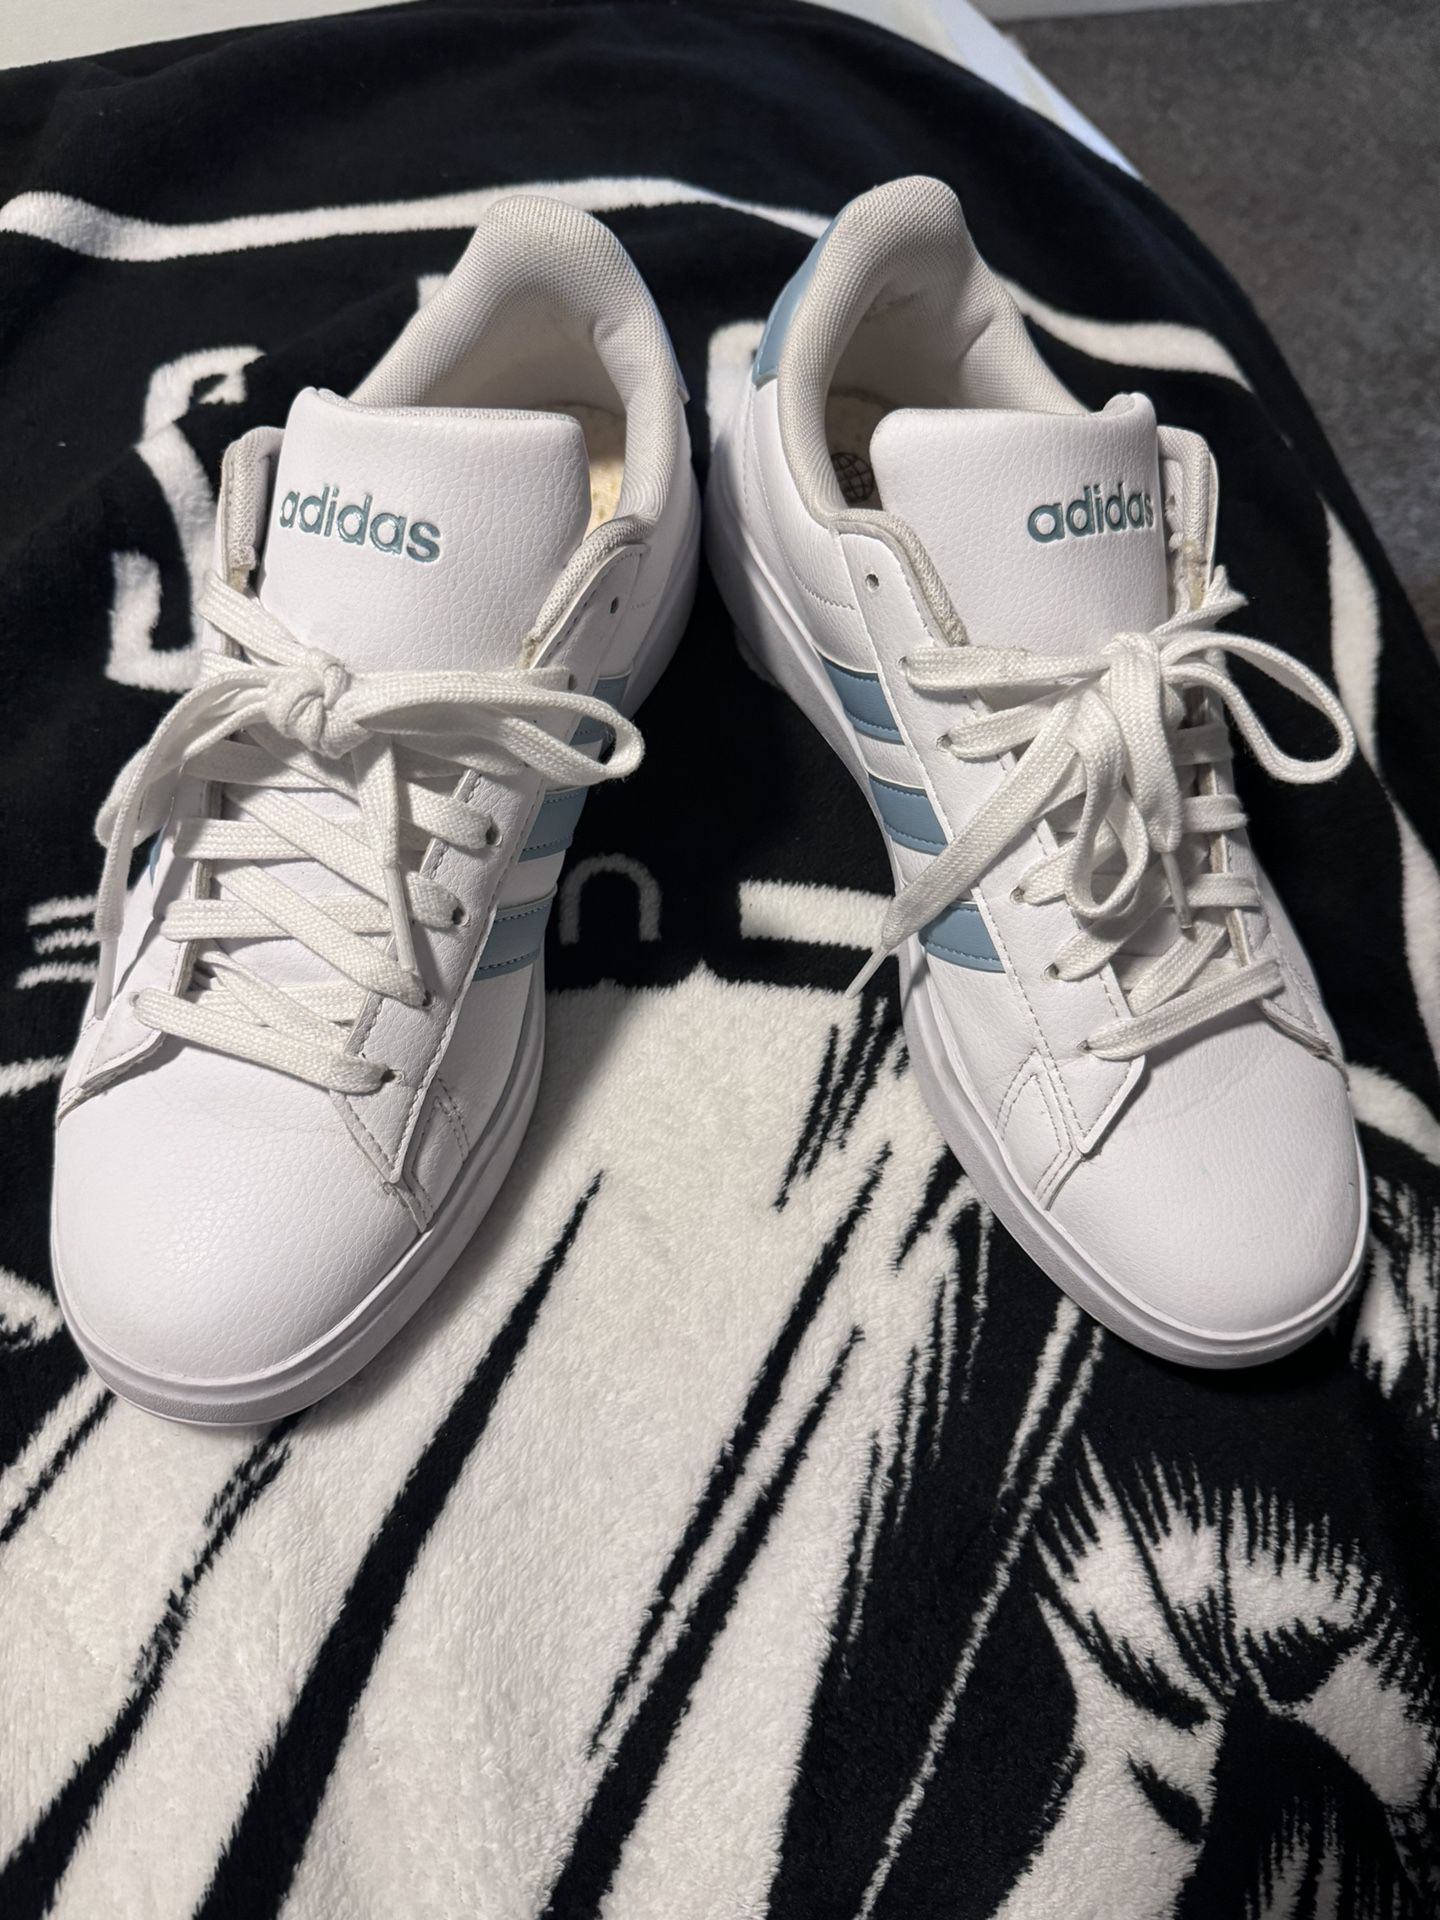 Women’s Adidas Shoes